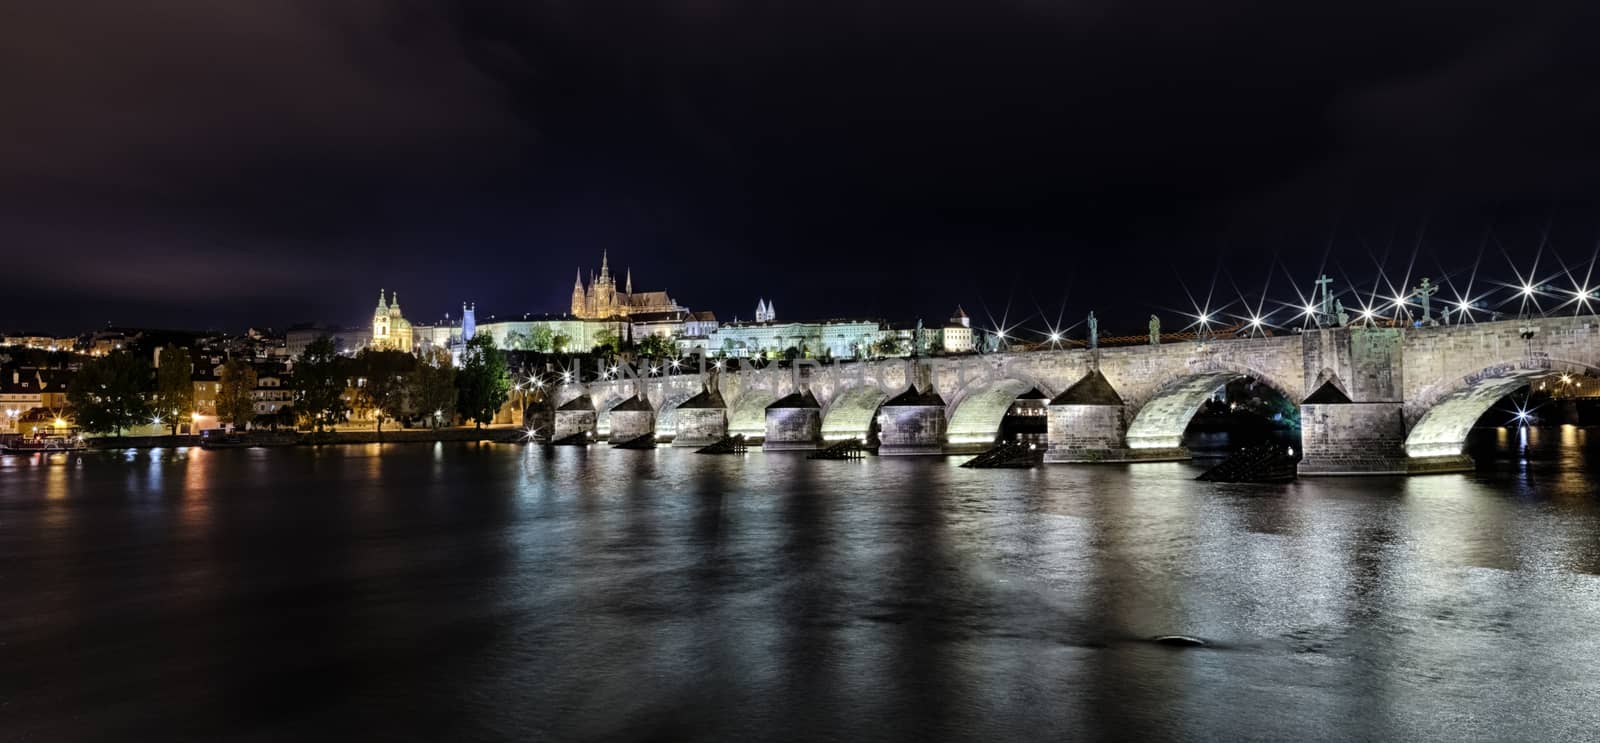 The Prague Castle and Charles bridge by hanusst